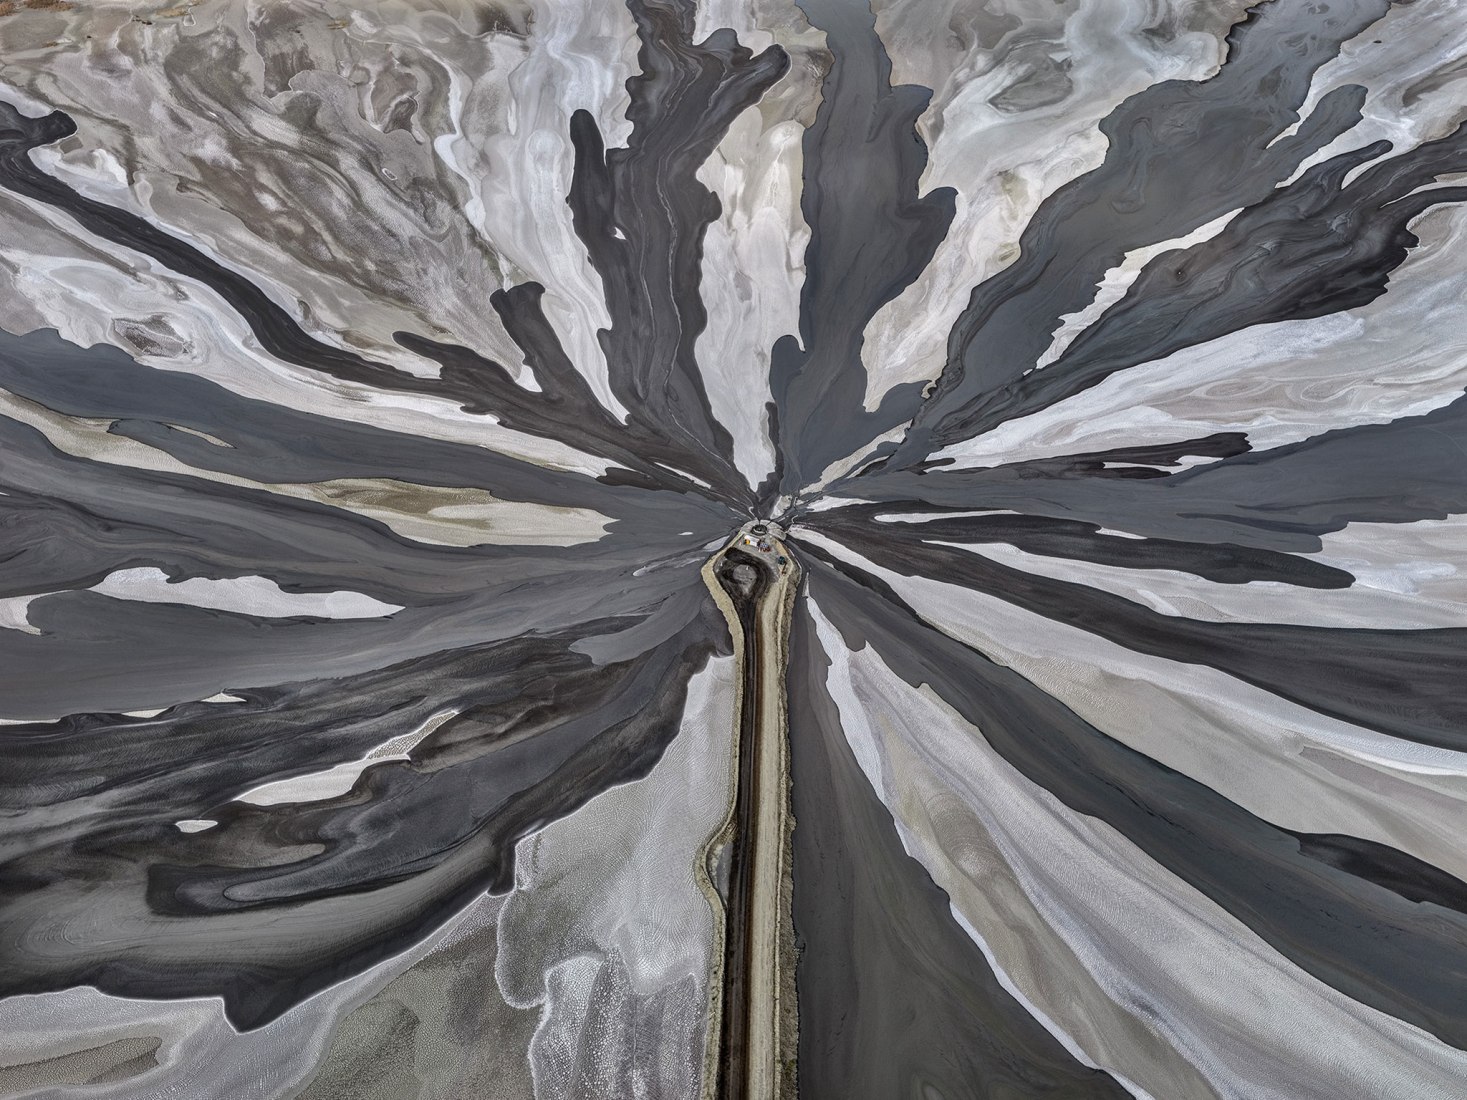 Tailings Pond, by Edward Butynsky. Wesselton Diamond Mine, Kimberley, Northern Cape, South Africa, 2018. Photograph by Edward Butynsky. Courtesy of Nicholas Metivier Gallery, Toronto / Flowers Gallery, London.